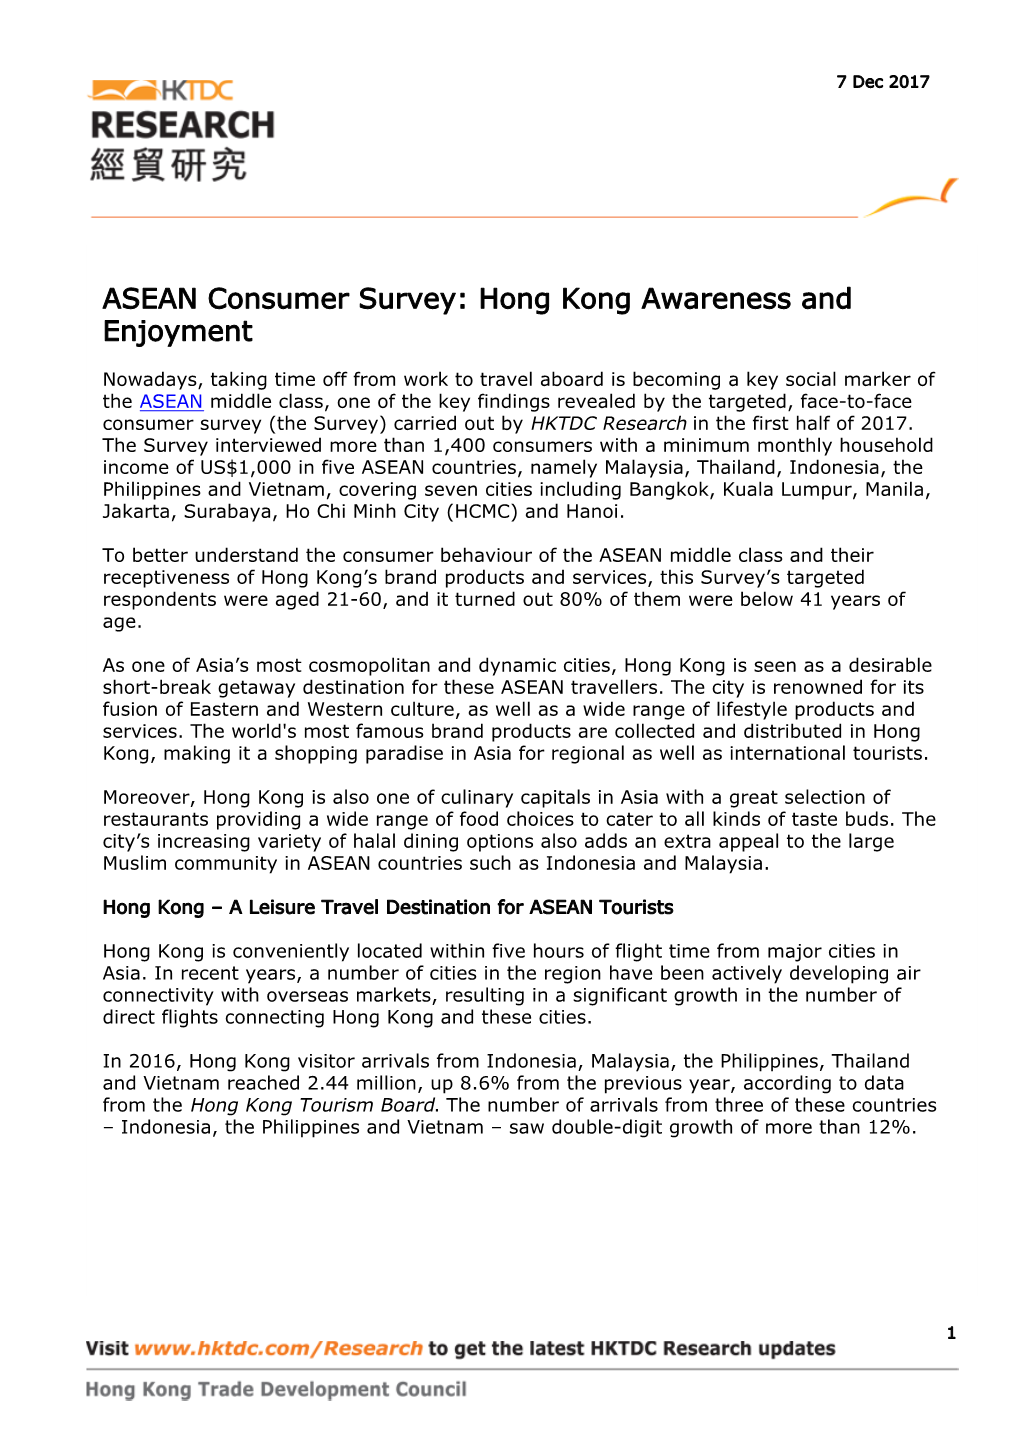 ASEAN Consumer Survey: Hong Kong Awareness and Enjoyment